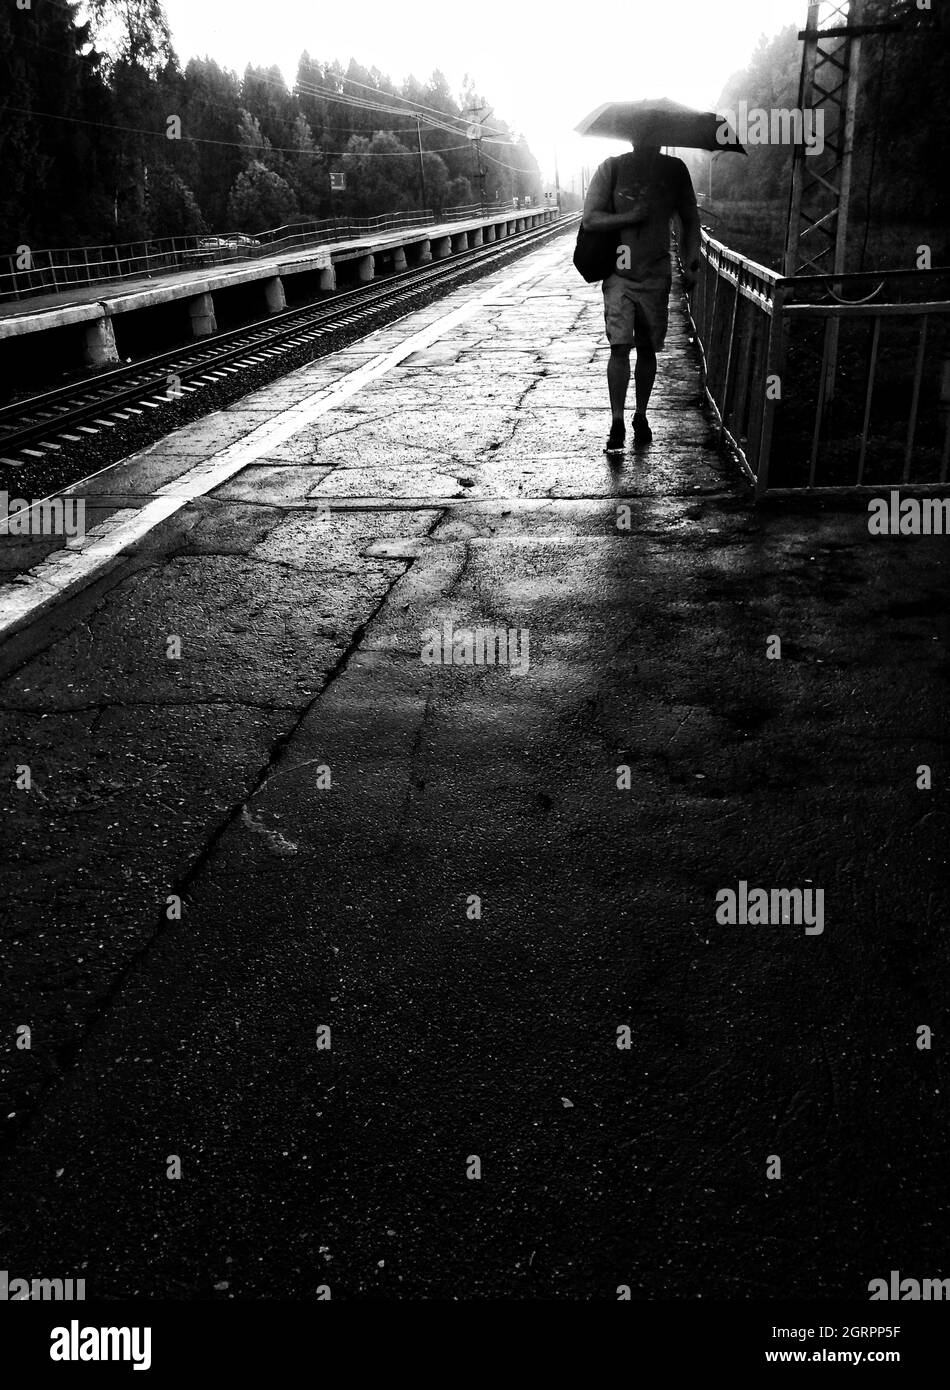 Man With Umbrella Walking On Railroad Station Platform Stock Photo